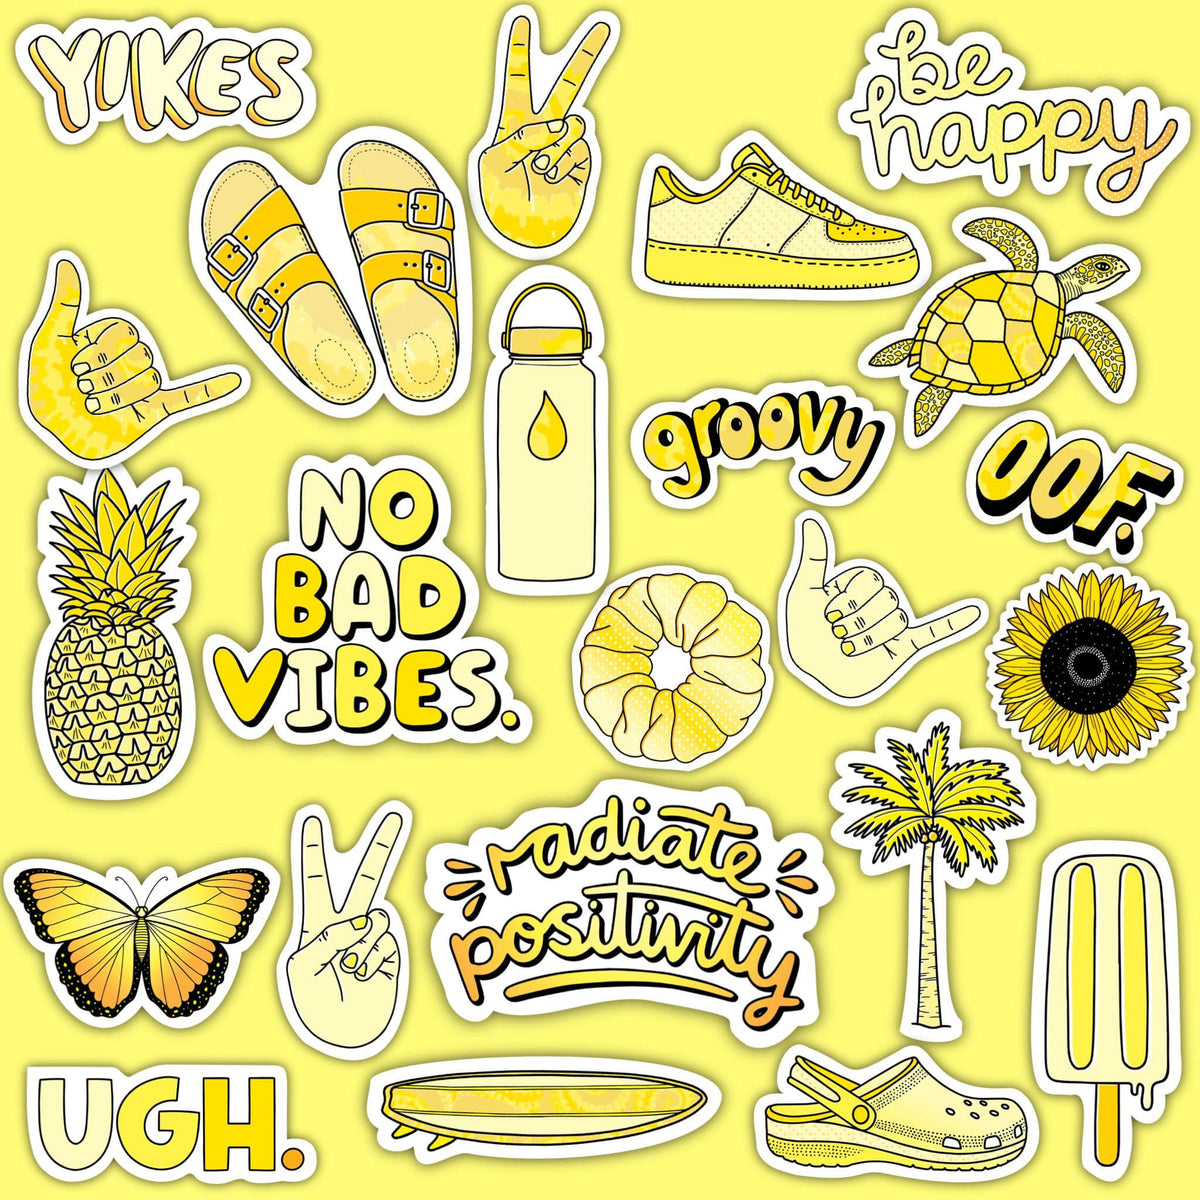 Big Moods Aesthetic Sticker Pack 10pc - Yellow